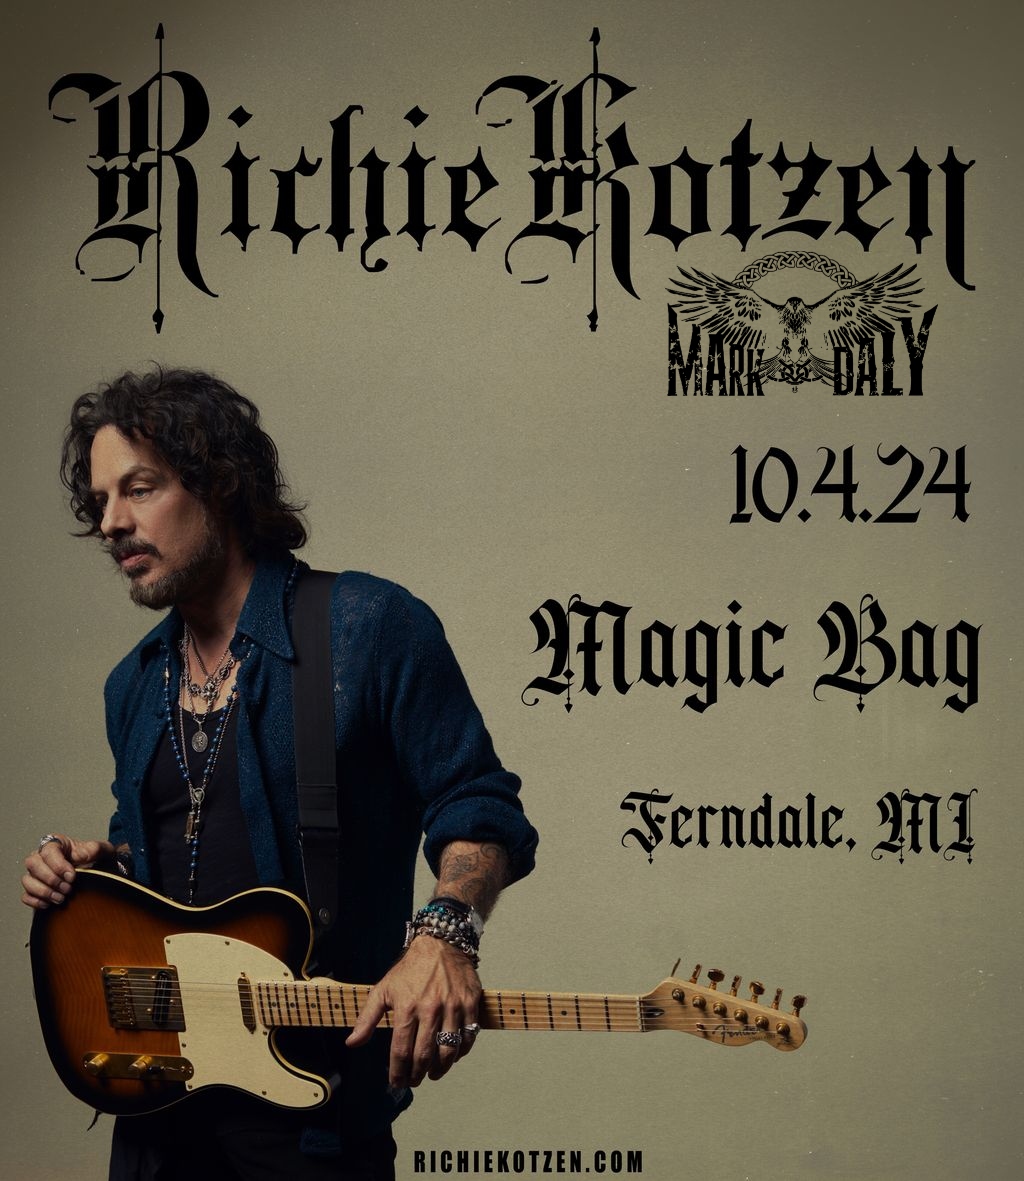 🖤Coming soon to the Magic Bag!🖤
The Magic Bag presents 
Richie Kotzen @Richie_Kotzen
with Mark Daly #MarkDaly
Fri, Oct. 4 | Tix: $38 adv. | 7 pm | All Ages
Ticket Link: tinyurl.com/2tyswr5z
#RichieKotzen #GuitarHero
#TheMagicBag #TagTheBag
#Ferndale #JustAnnounced